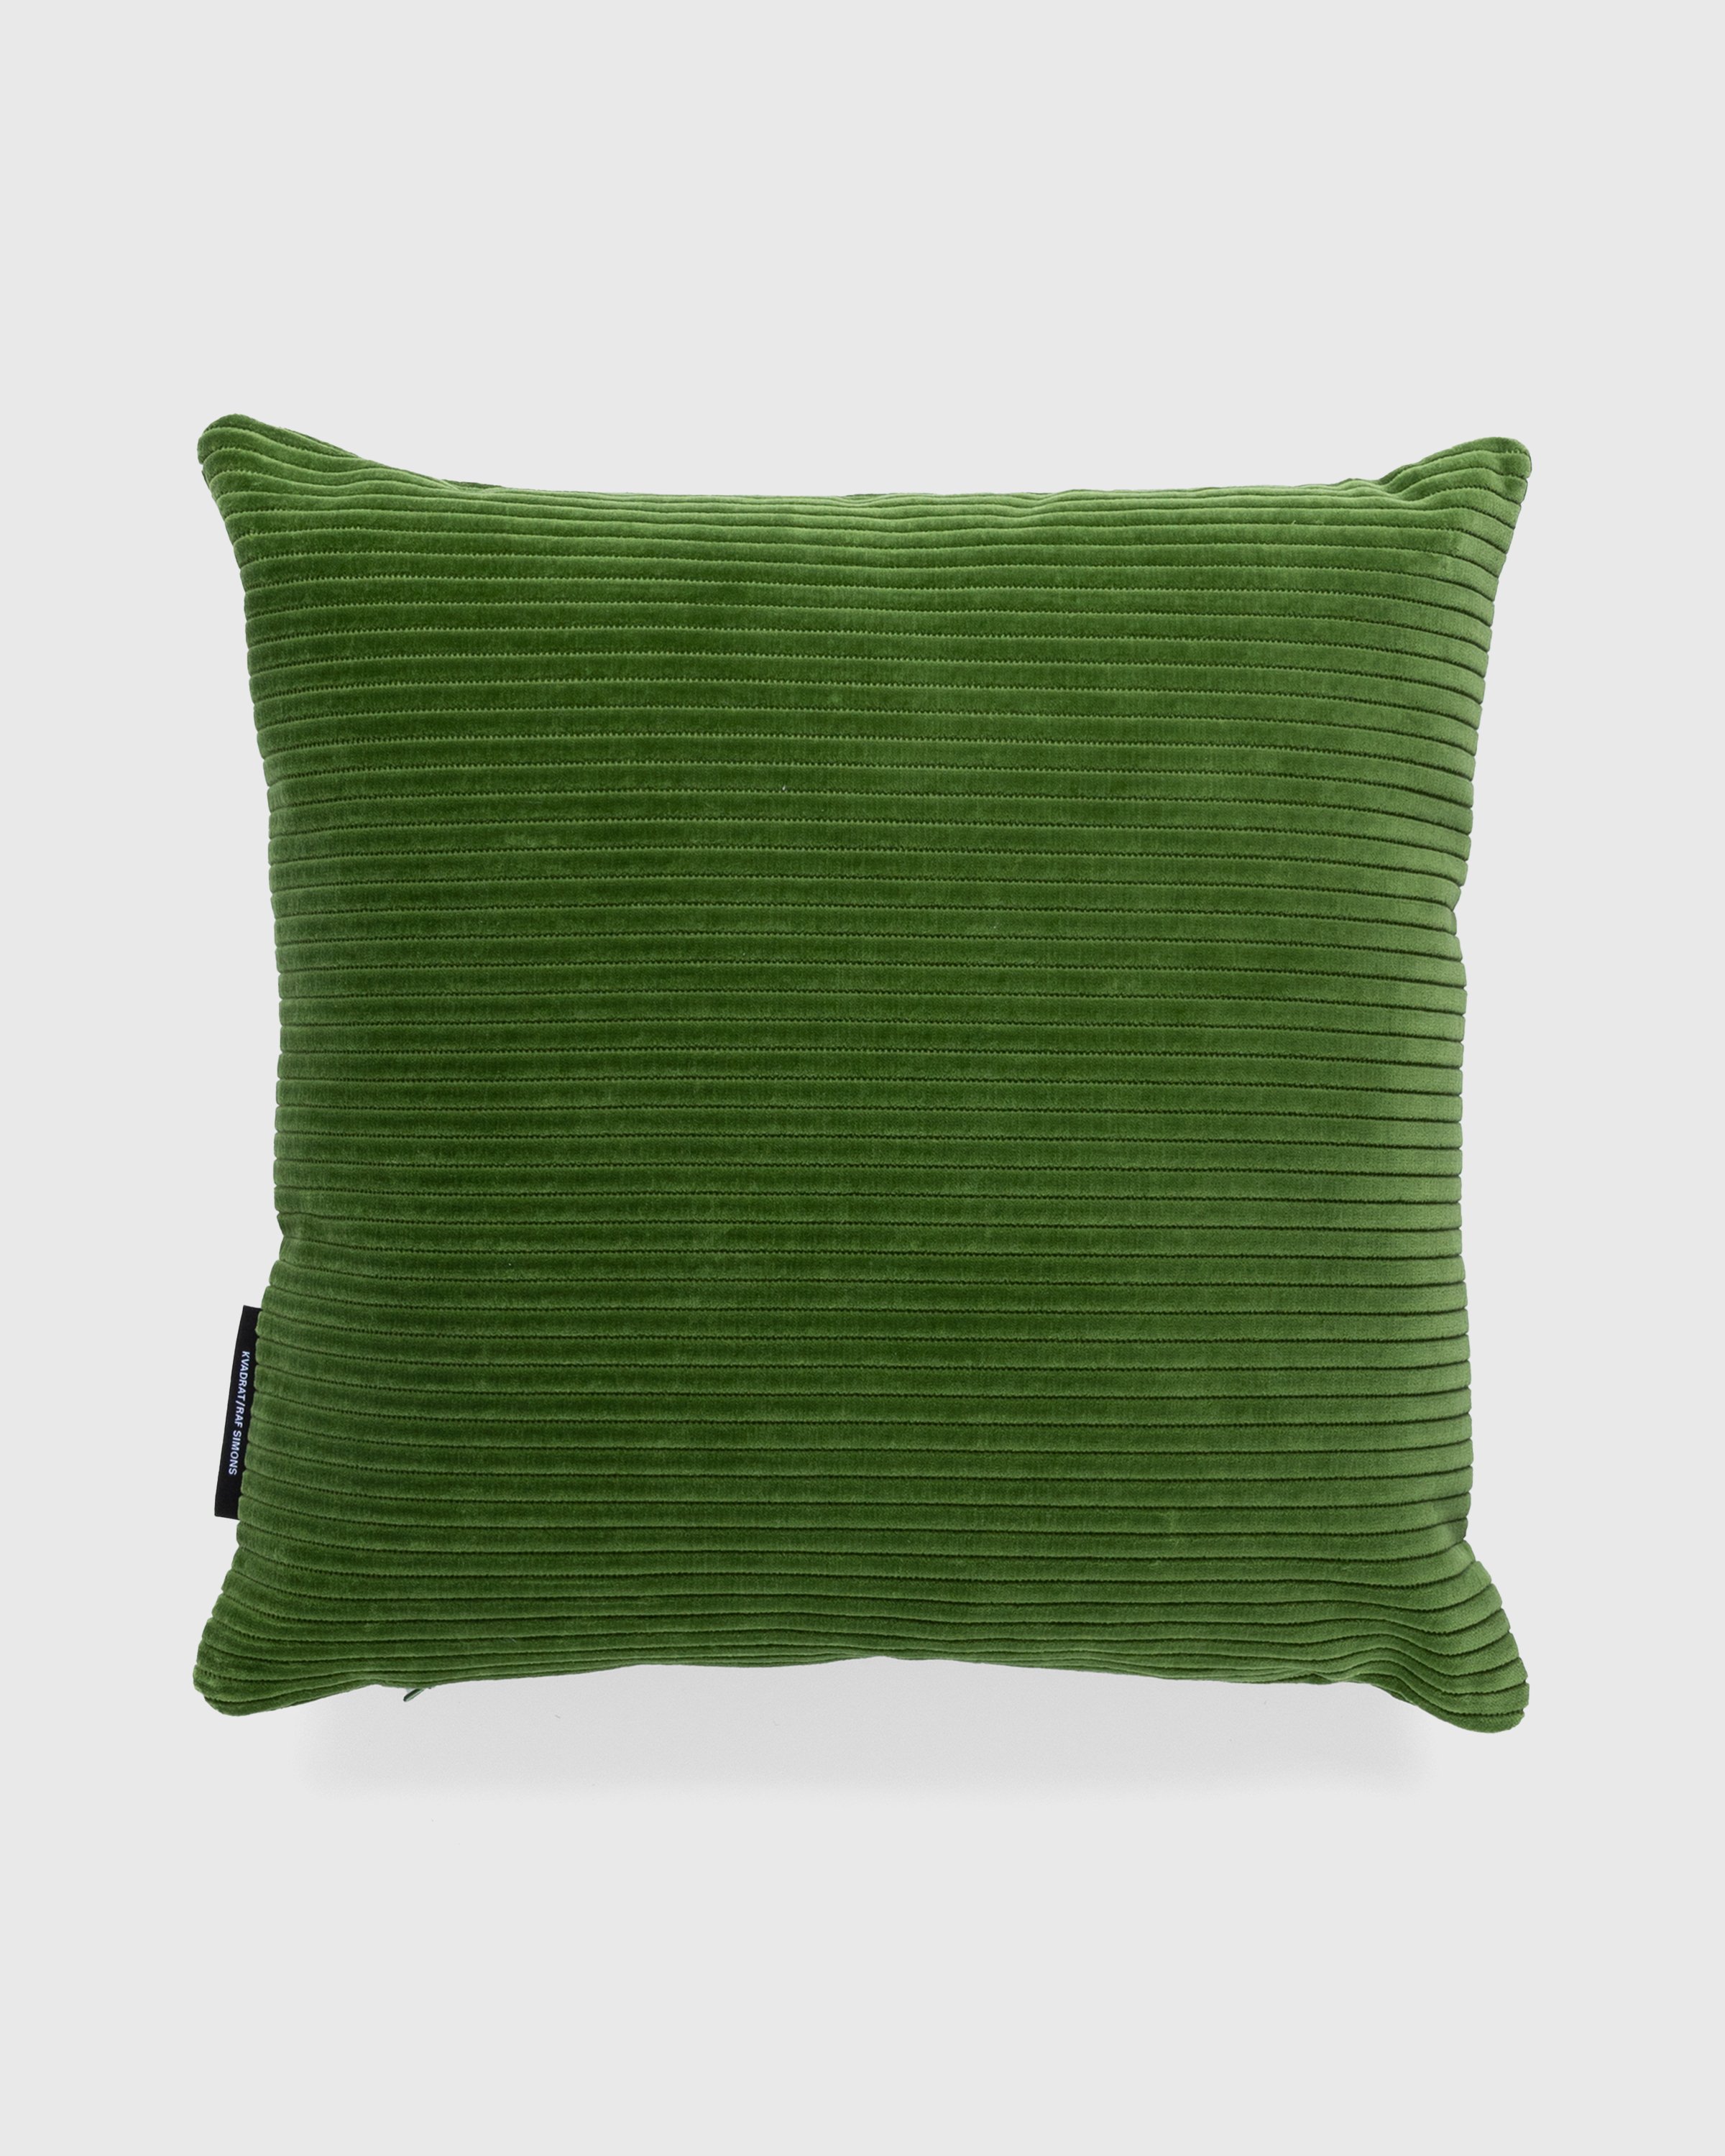 Kvadrat/Raf Simons - Phlox Pillow Green - Lifestyle - Green - Image 1